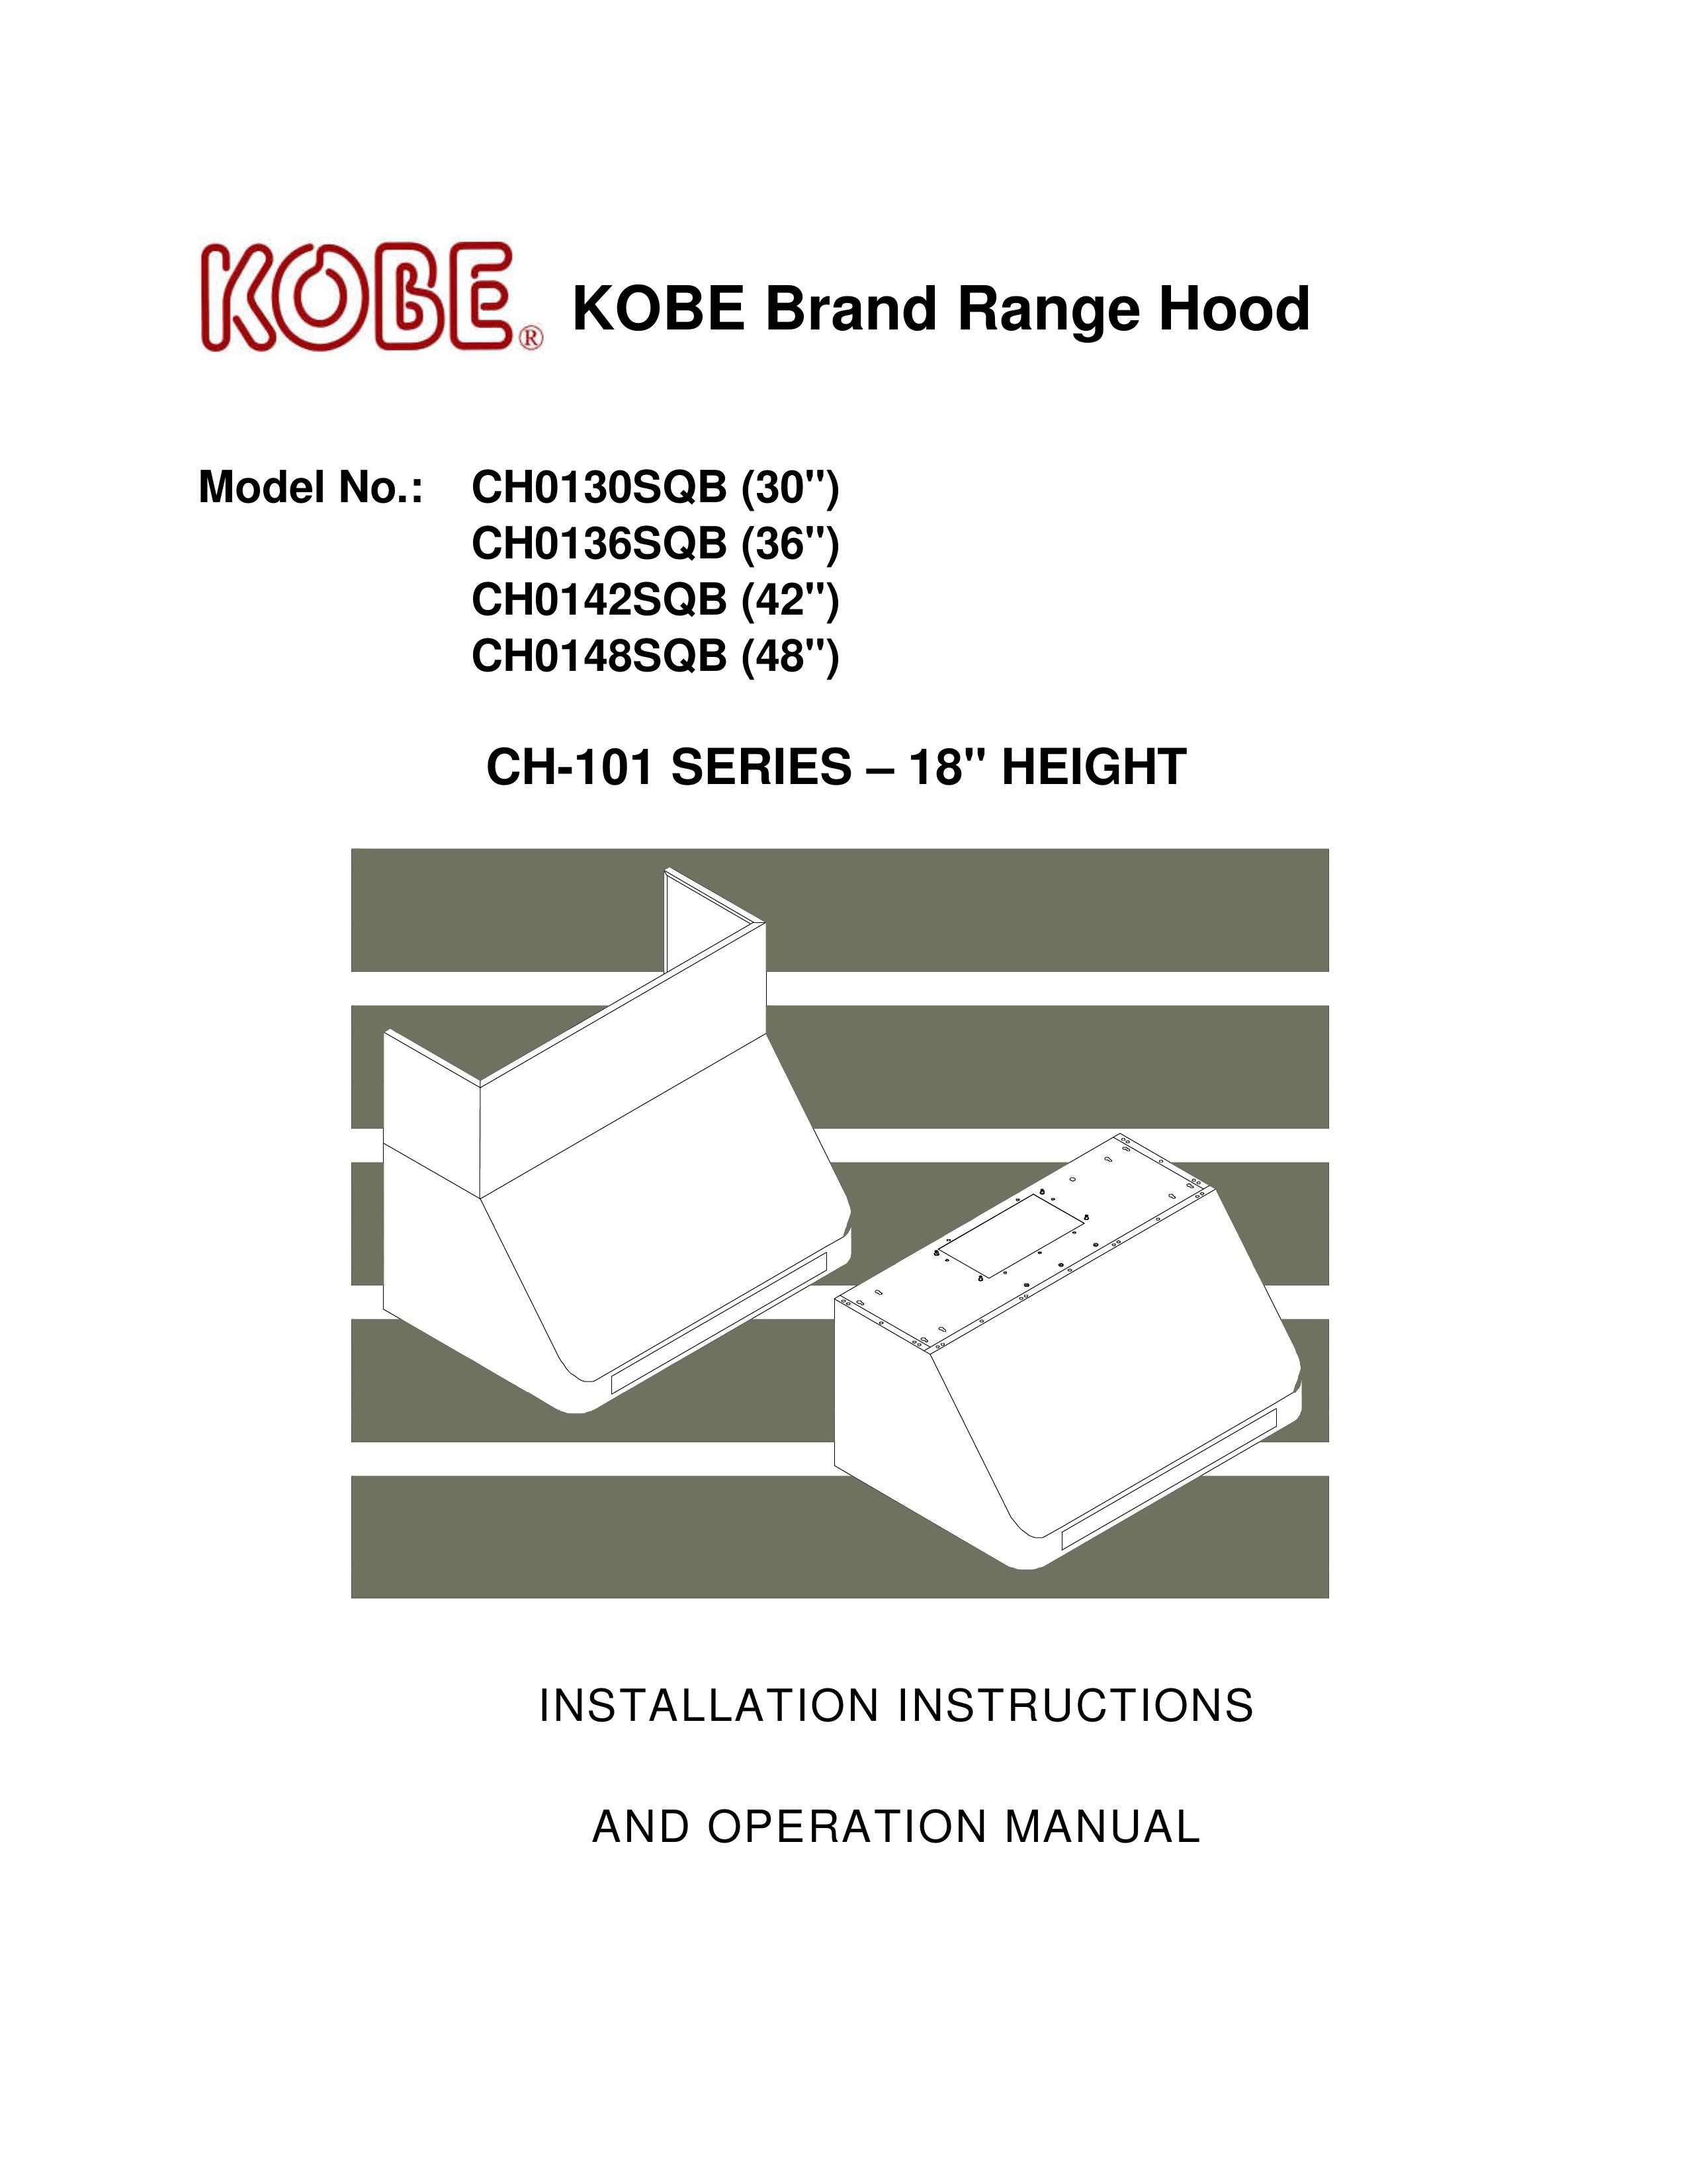 Kobe Range Hoods CH0142SQB (42") Ventilation Hood User Manual